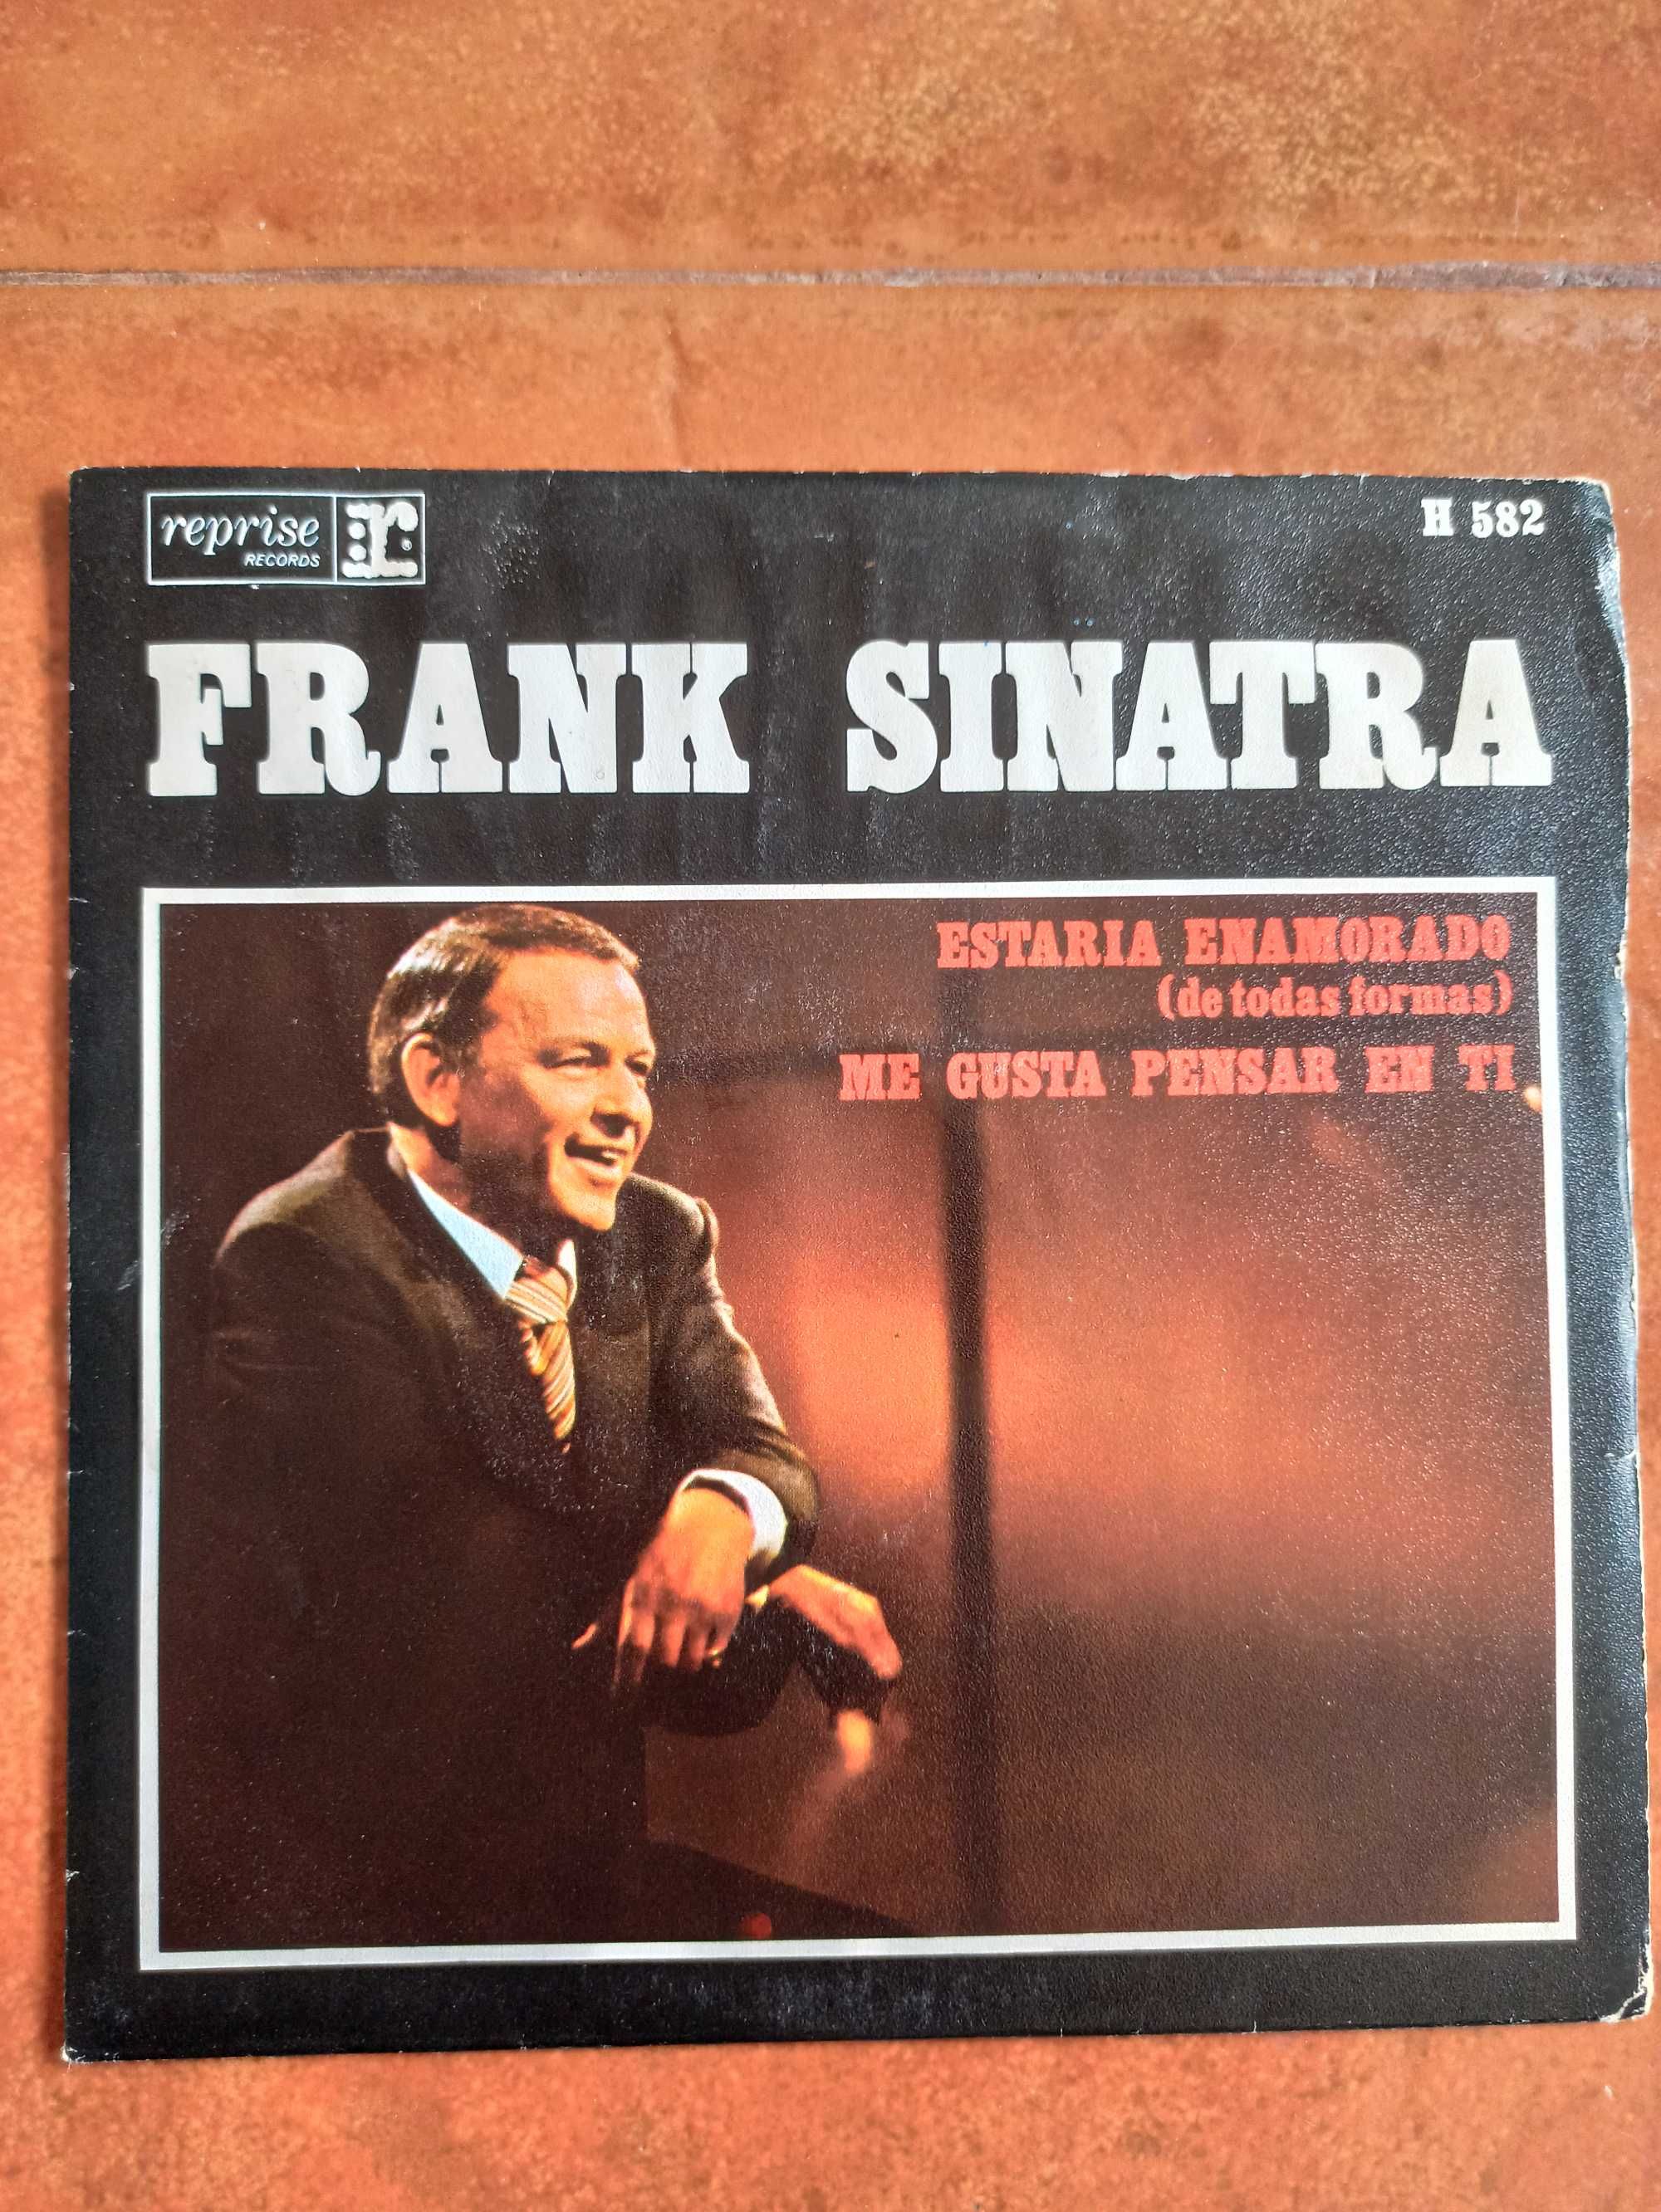 Frank Sinatra - discos de vinil e dvd